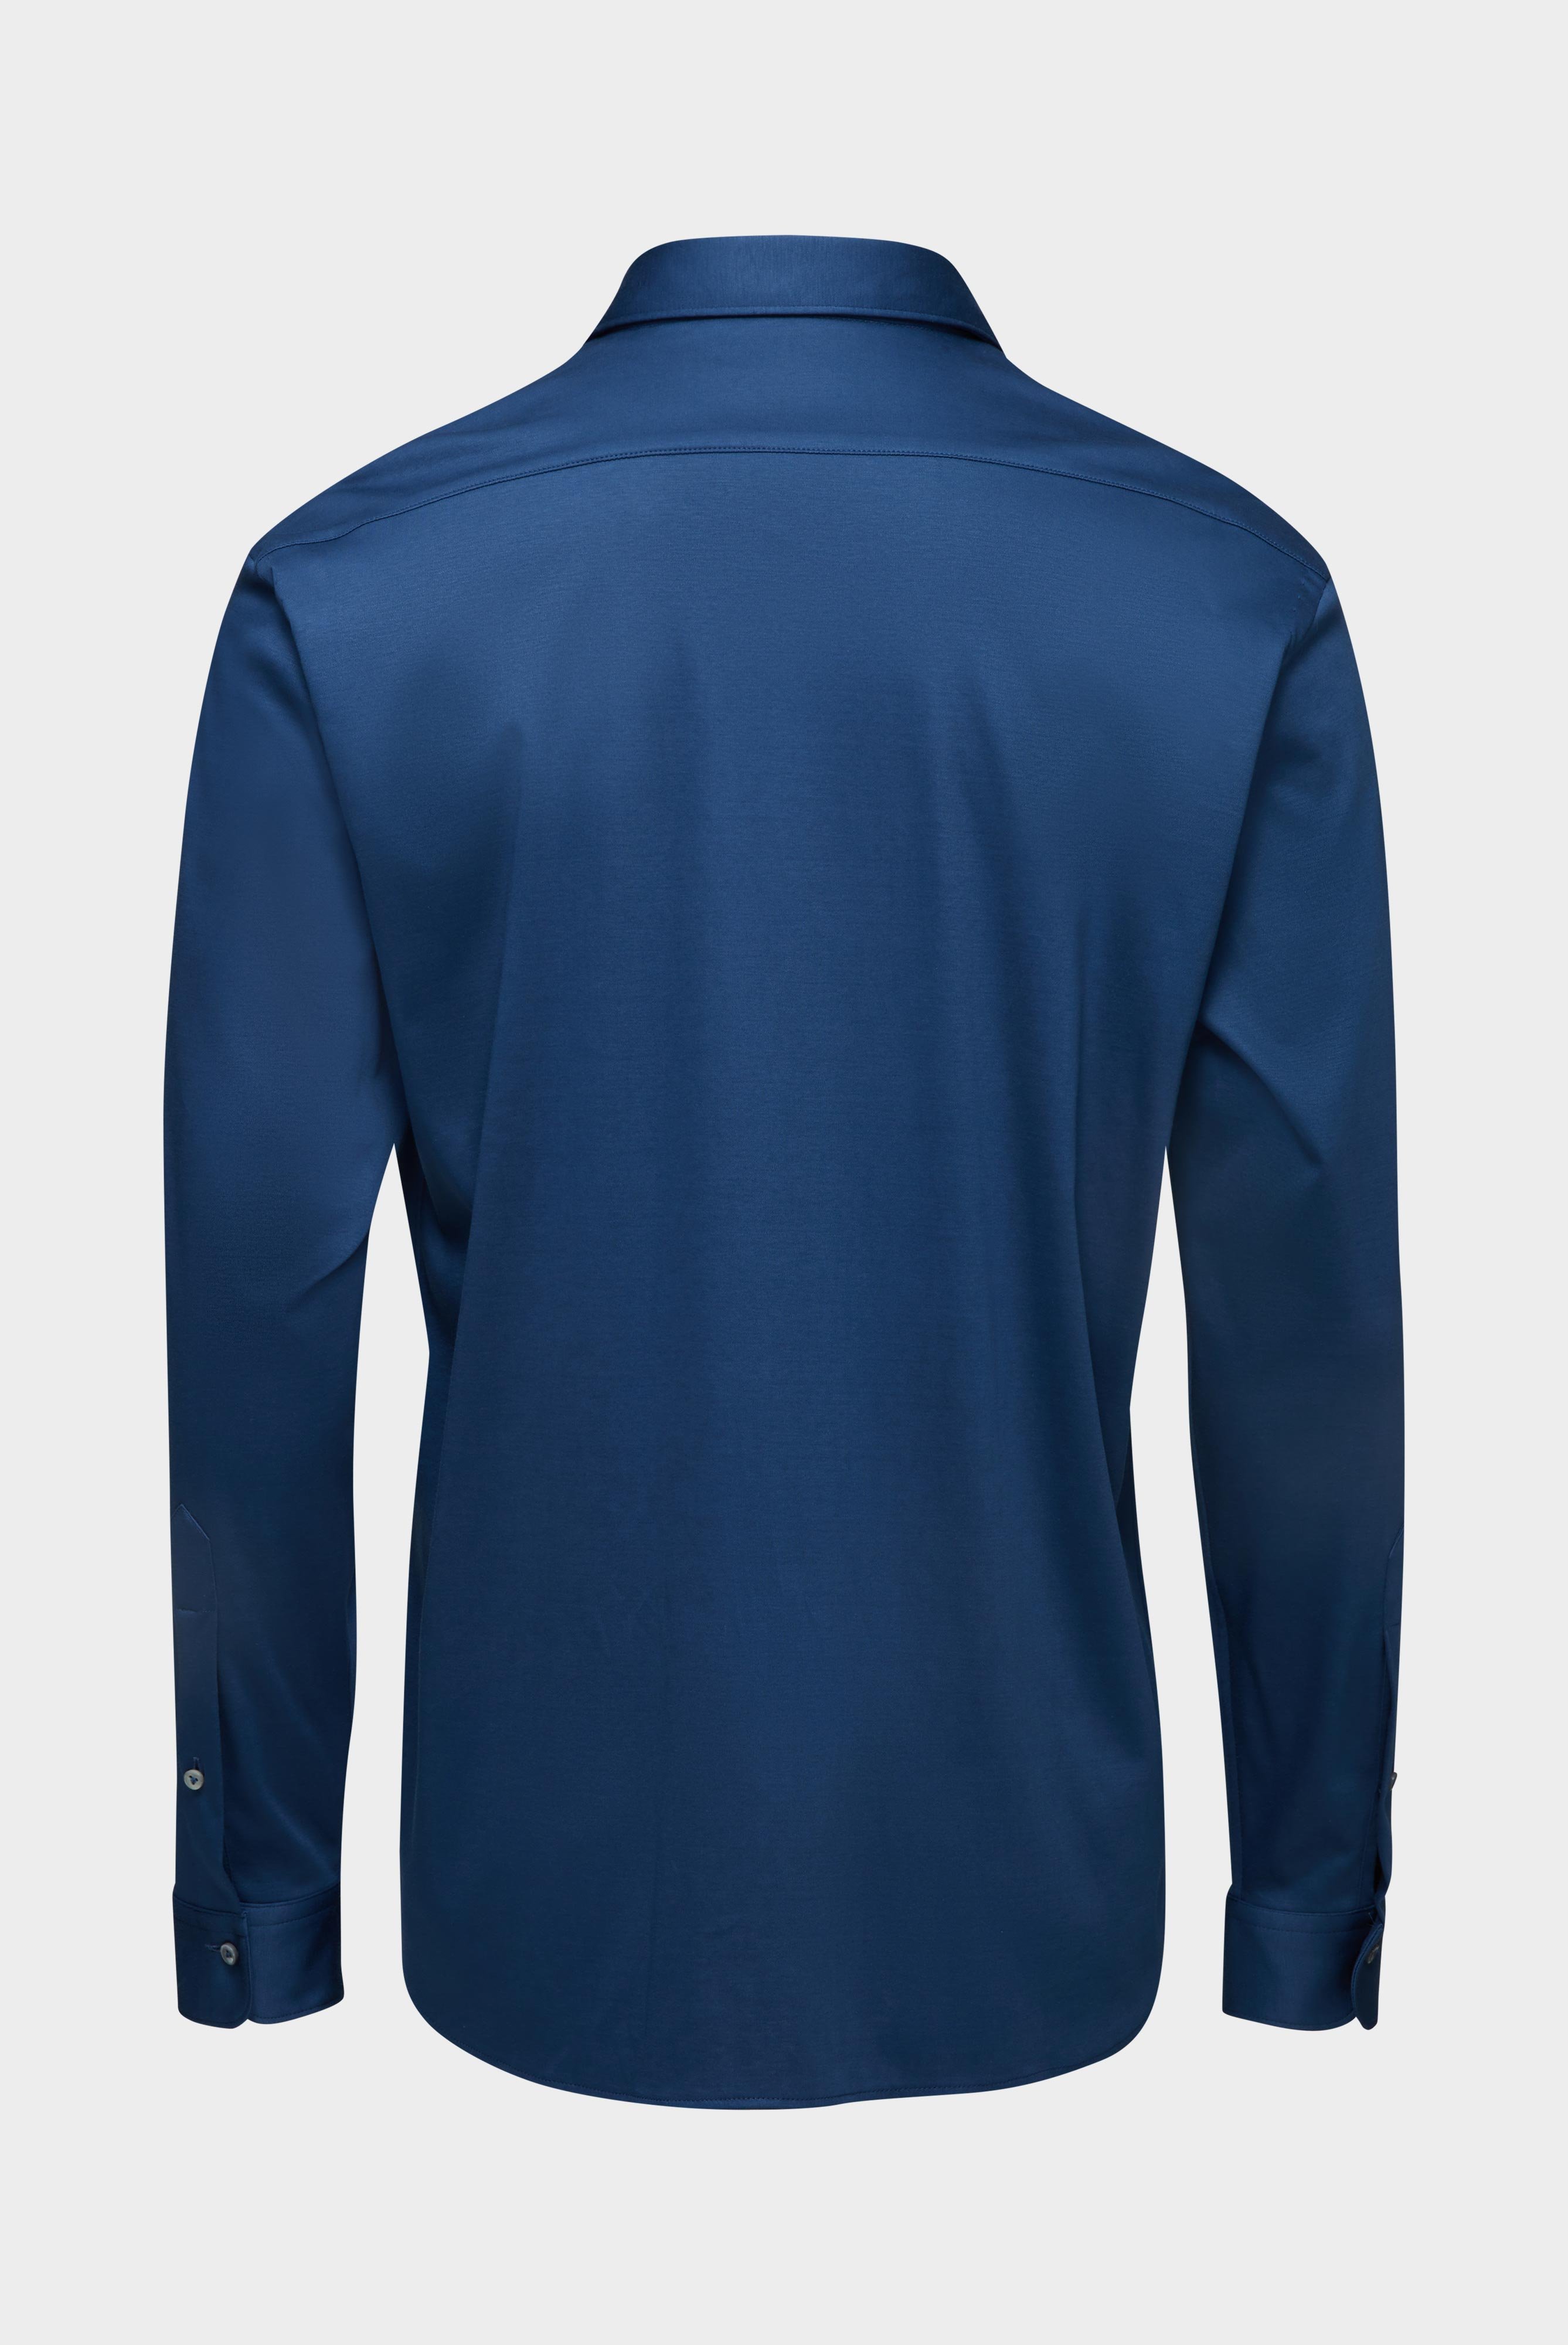 Casual Hemden+Jersey Hemd aus Schweizer Baumwolle Tailor Fit+20.1683.UC.180031.780.XXL